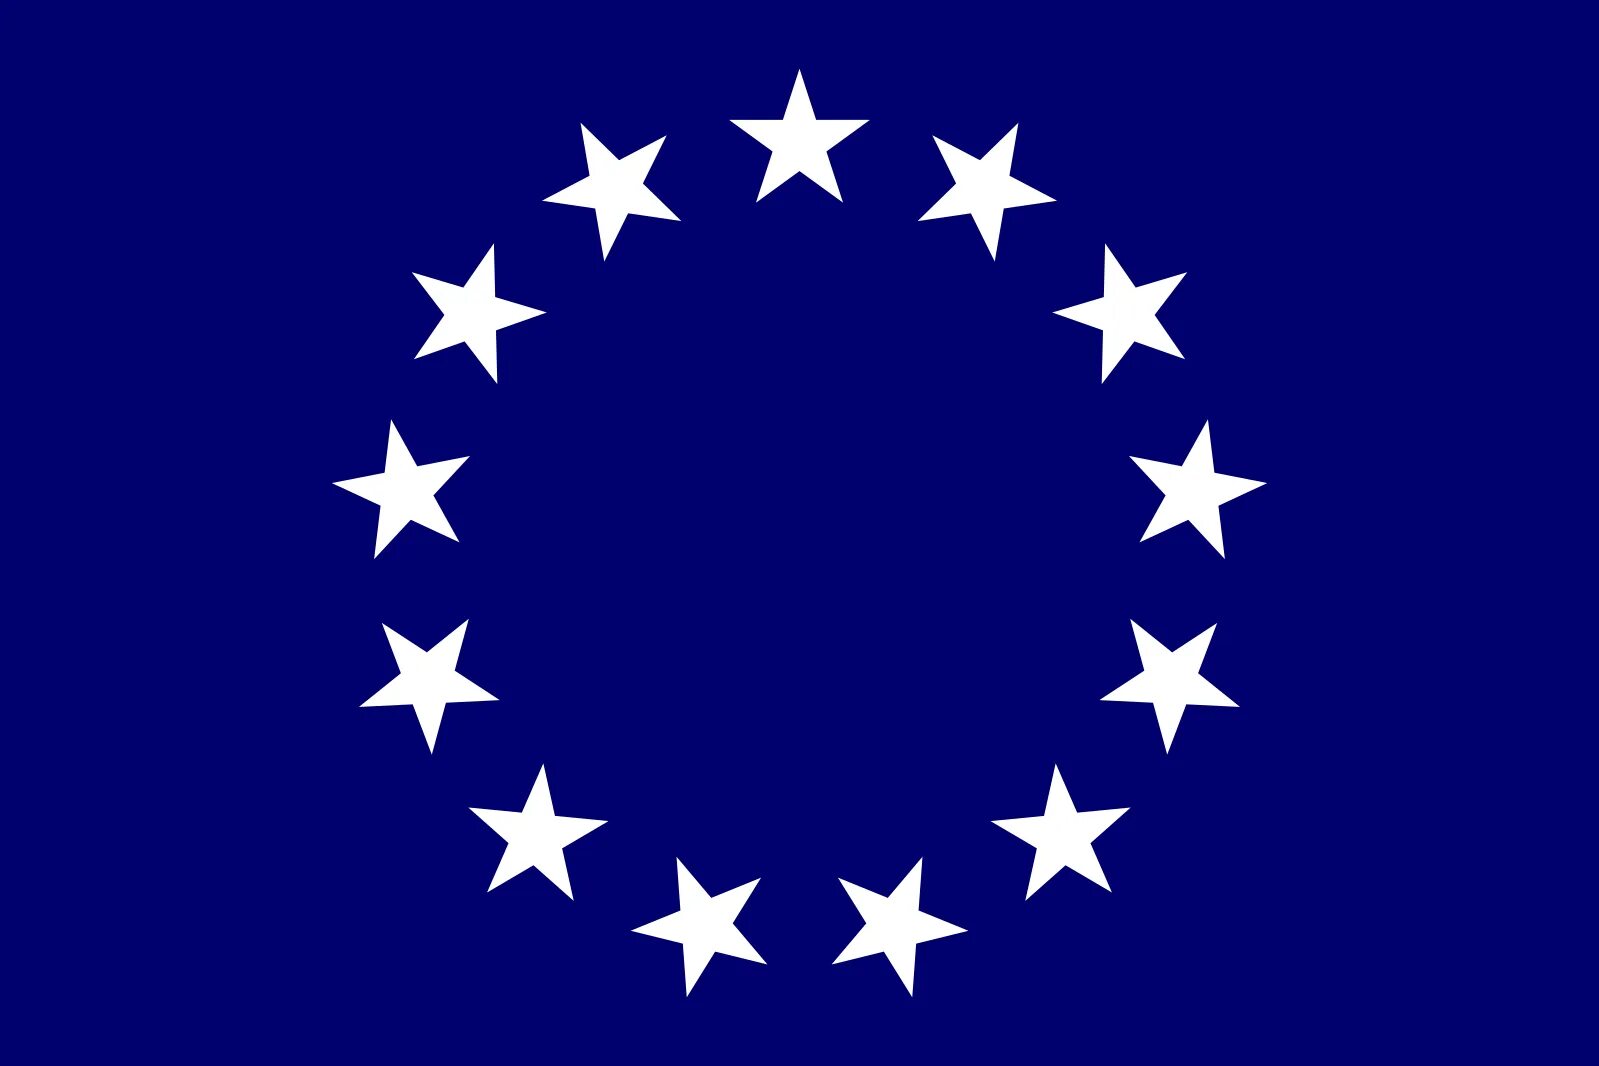 Флаги со звездами какие. Флаг со звездочками. Герб Евросоюза. Эмблема звезда. Синий флаг.